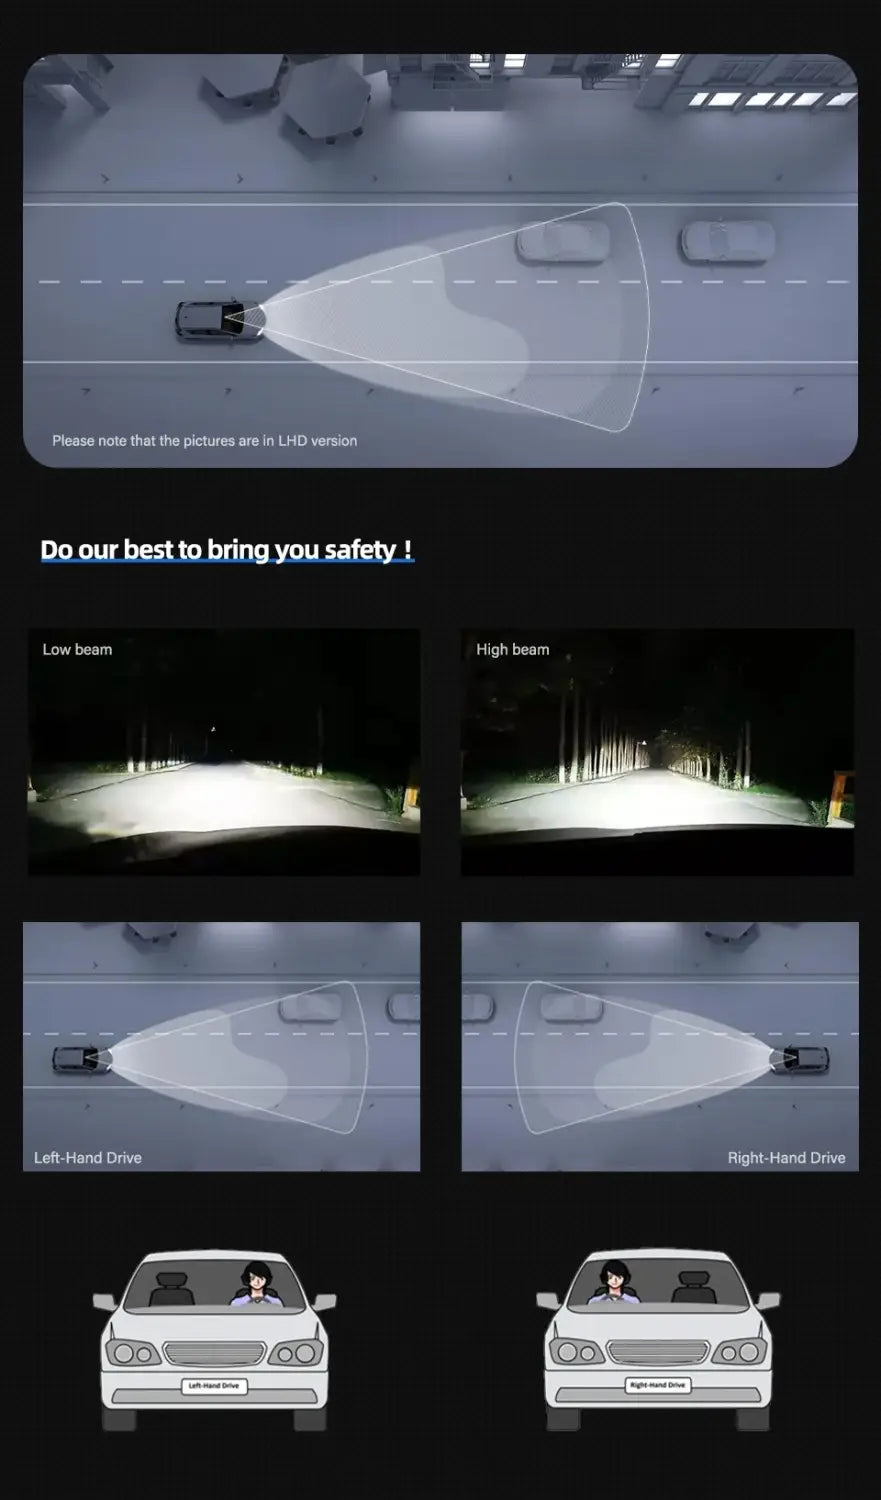 AKD Head Lamp for BMW F20 LED Headlight 2015 - 2018